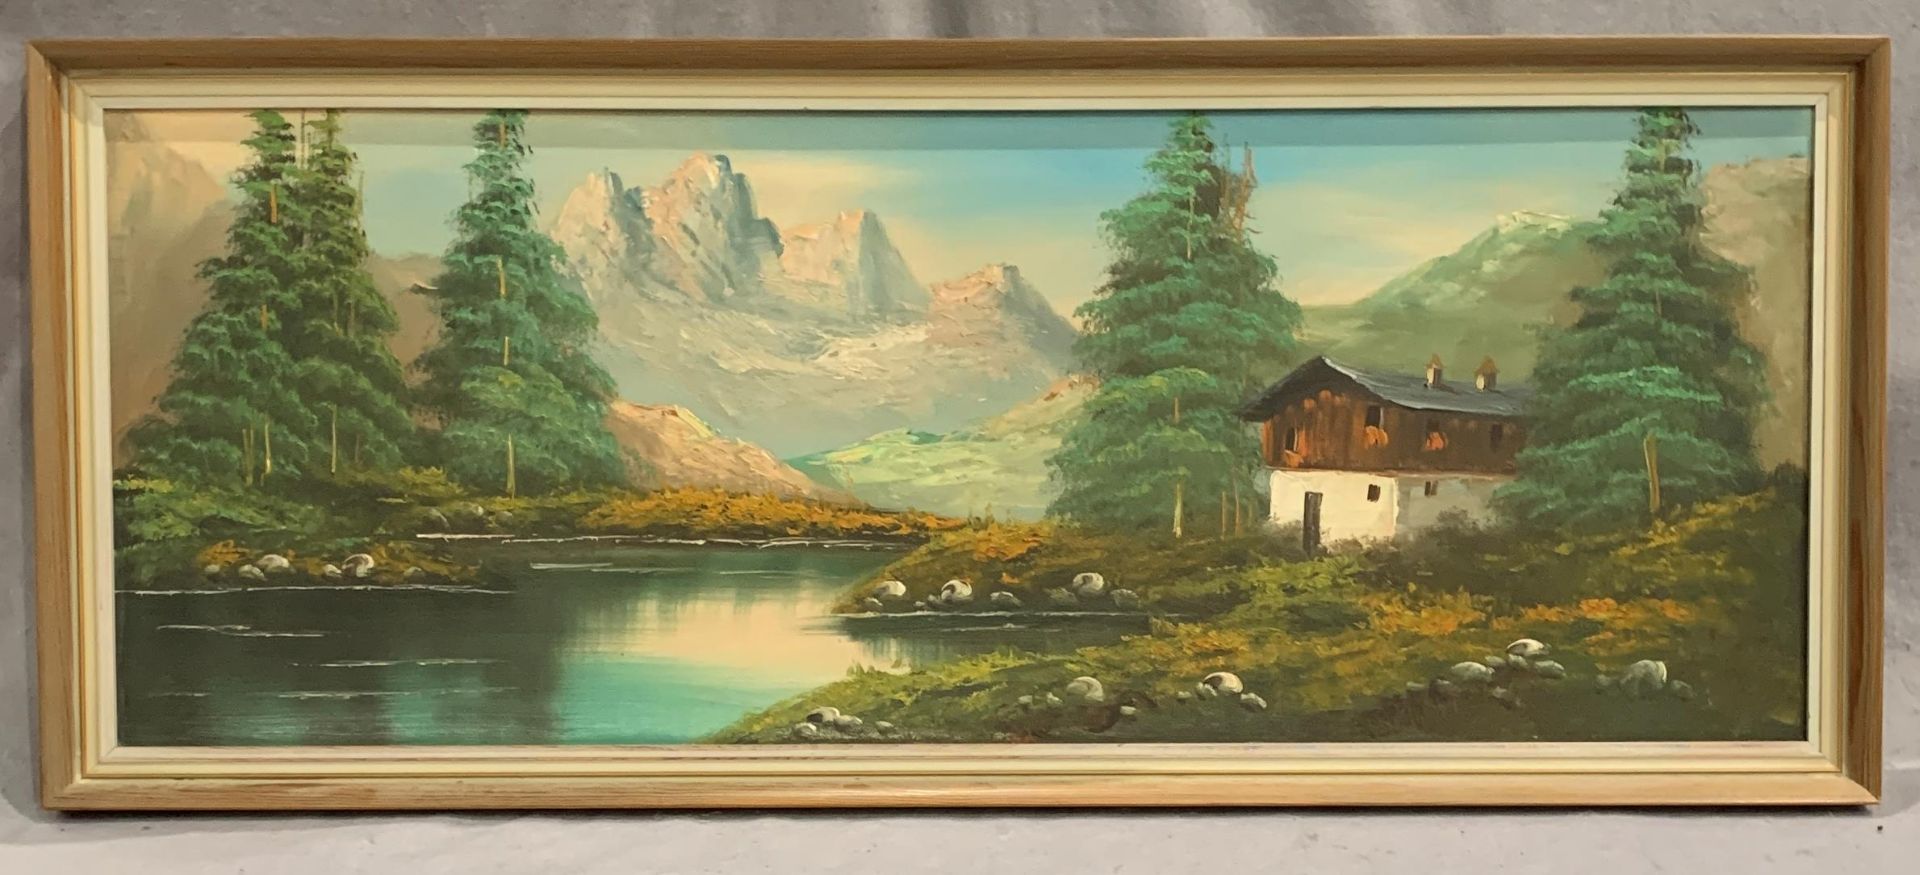 Framed oil on canvas 'Alpine Scene' 42 x 106cm